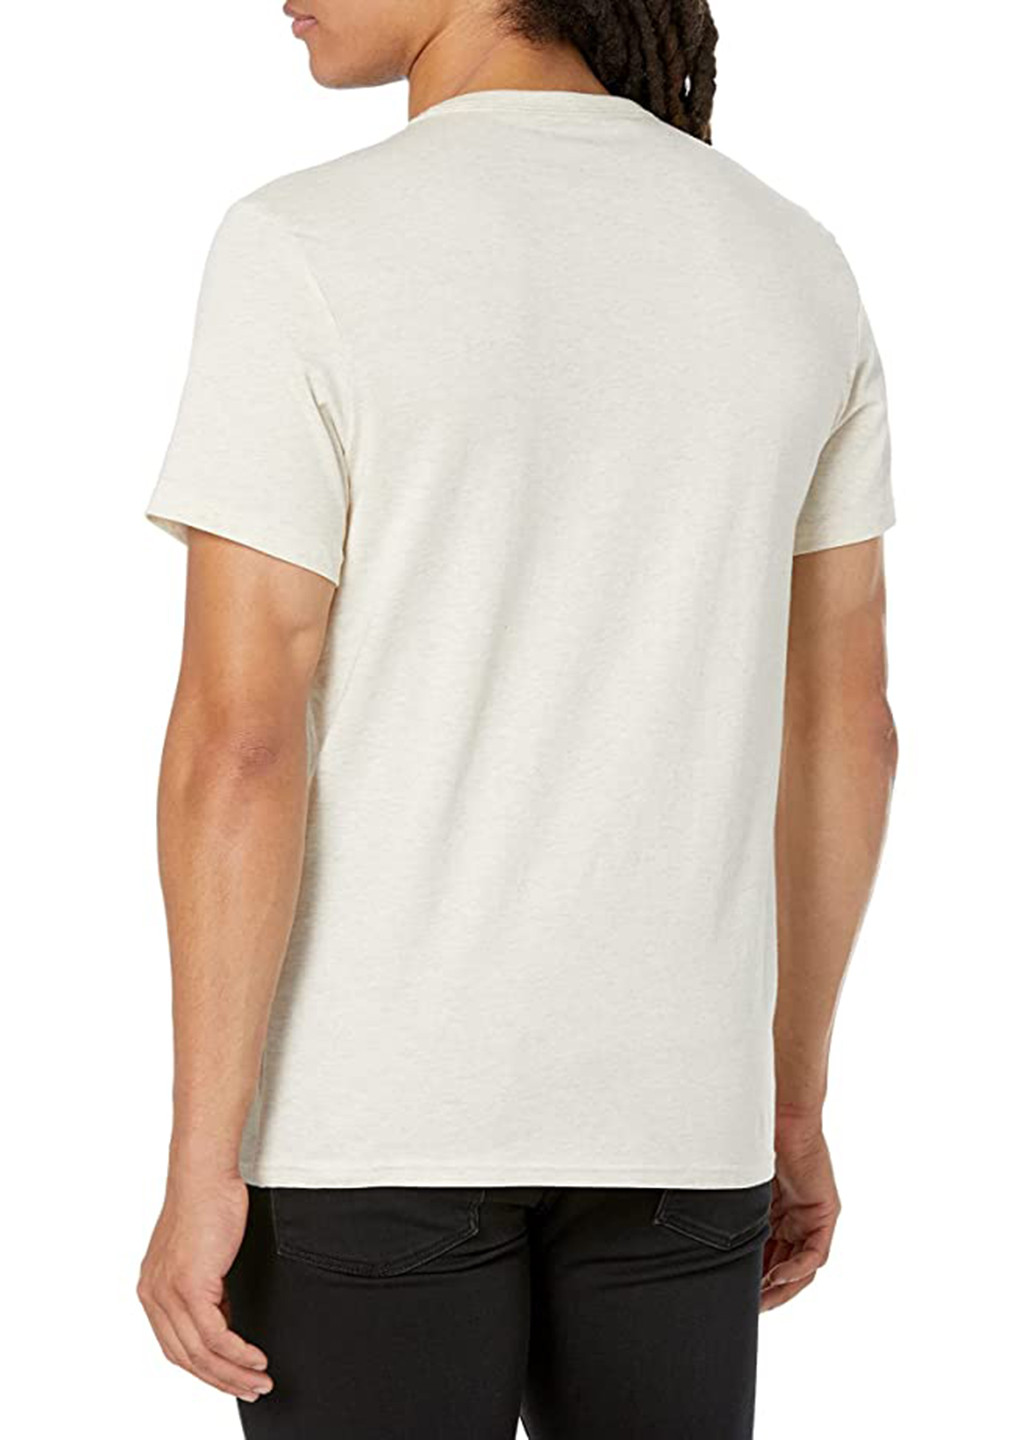 Светло-бежевая футболка Calvin Klein